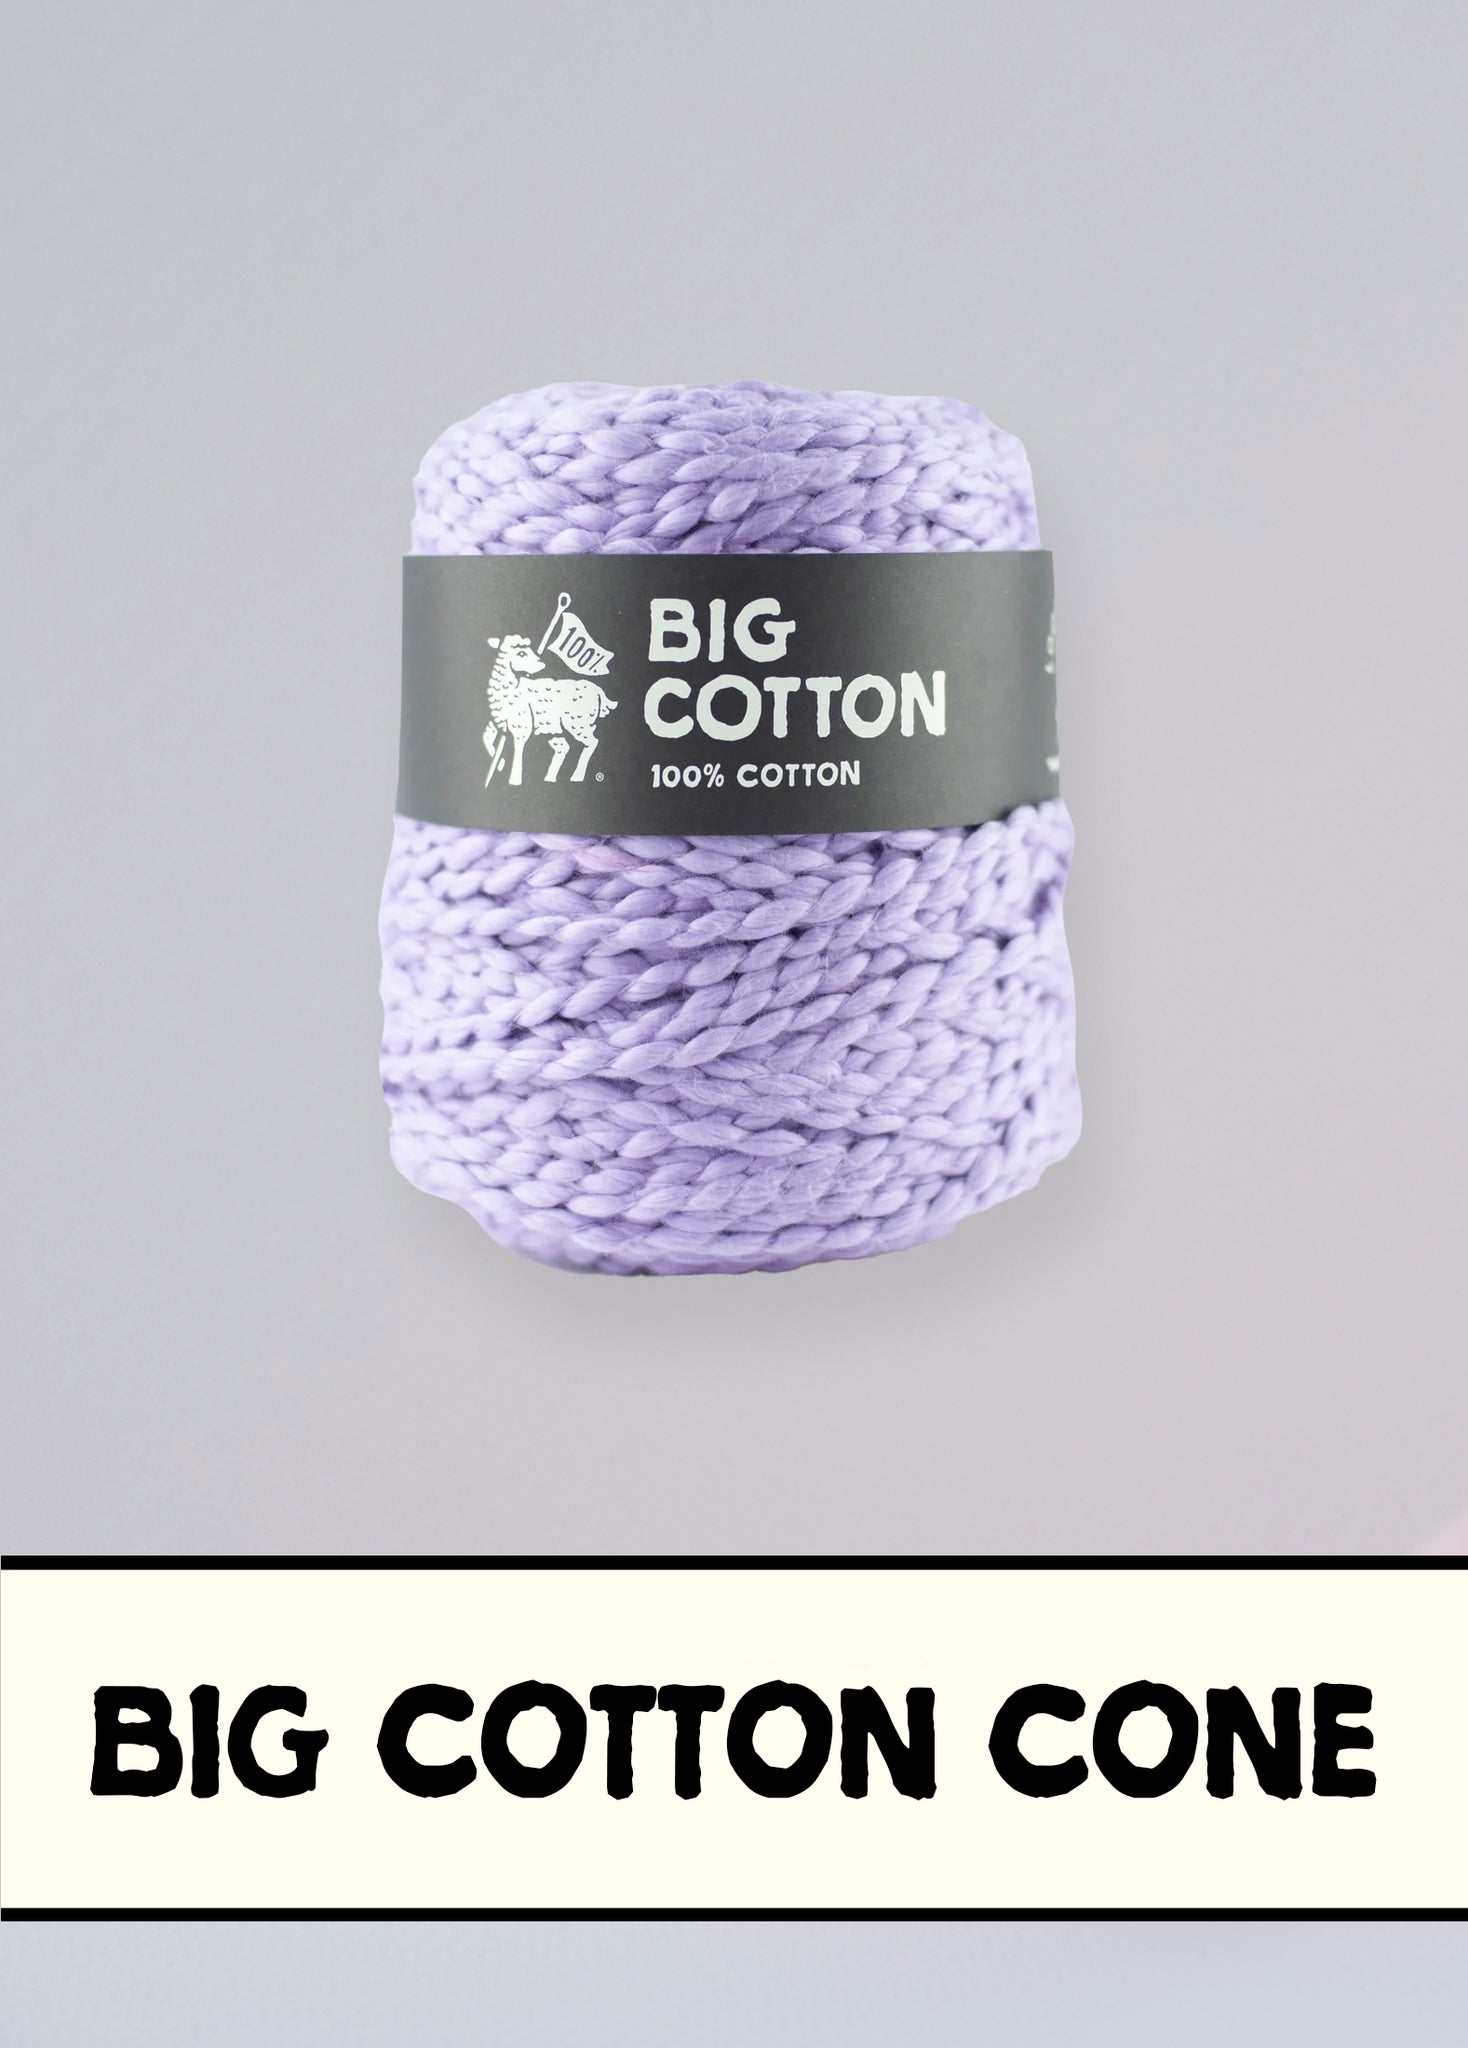 SALE - 20% OFF ORIGINAL PRICE Big Cotton Cone